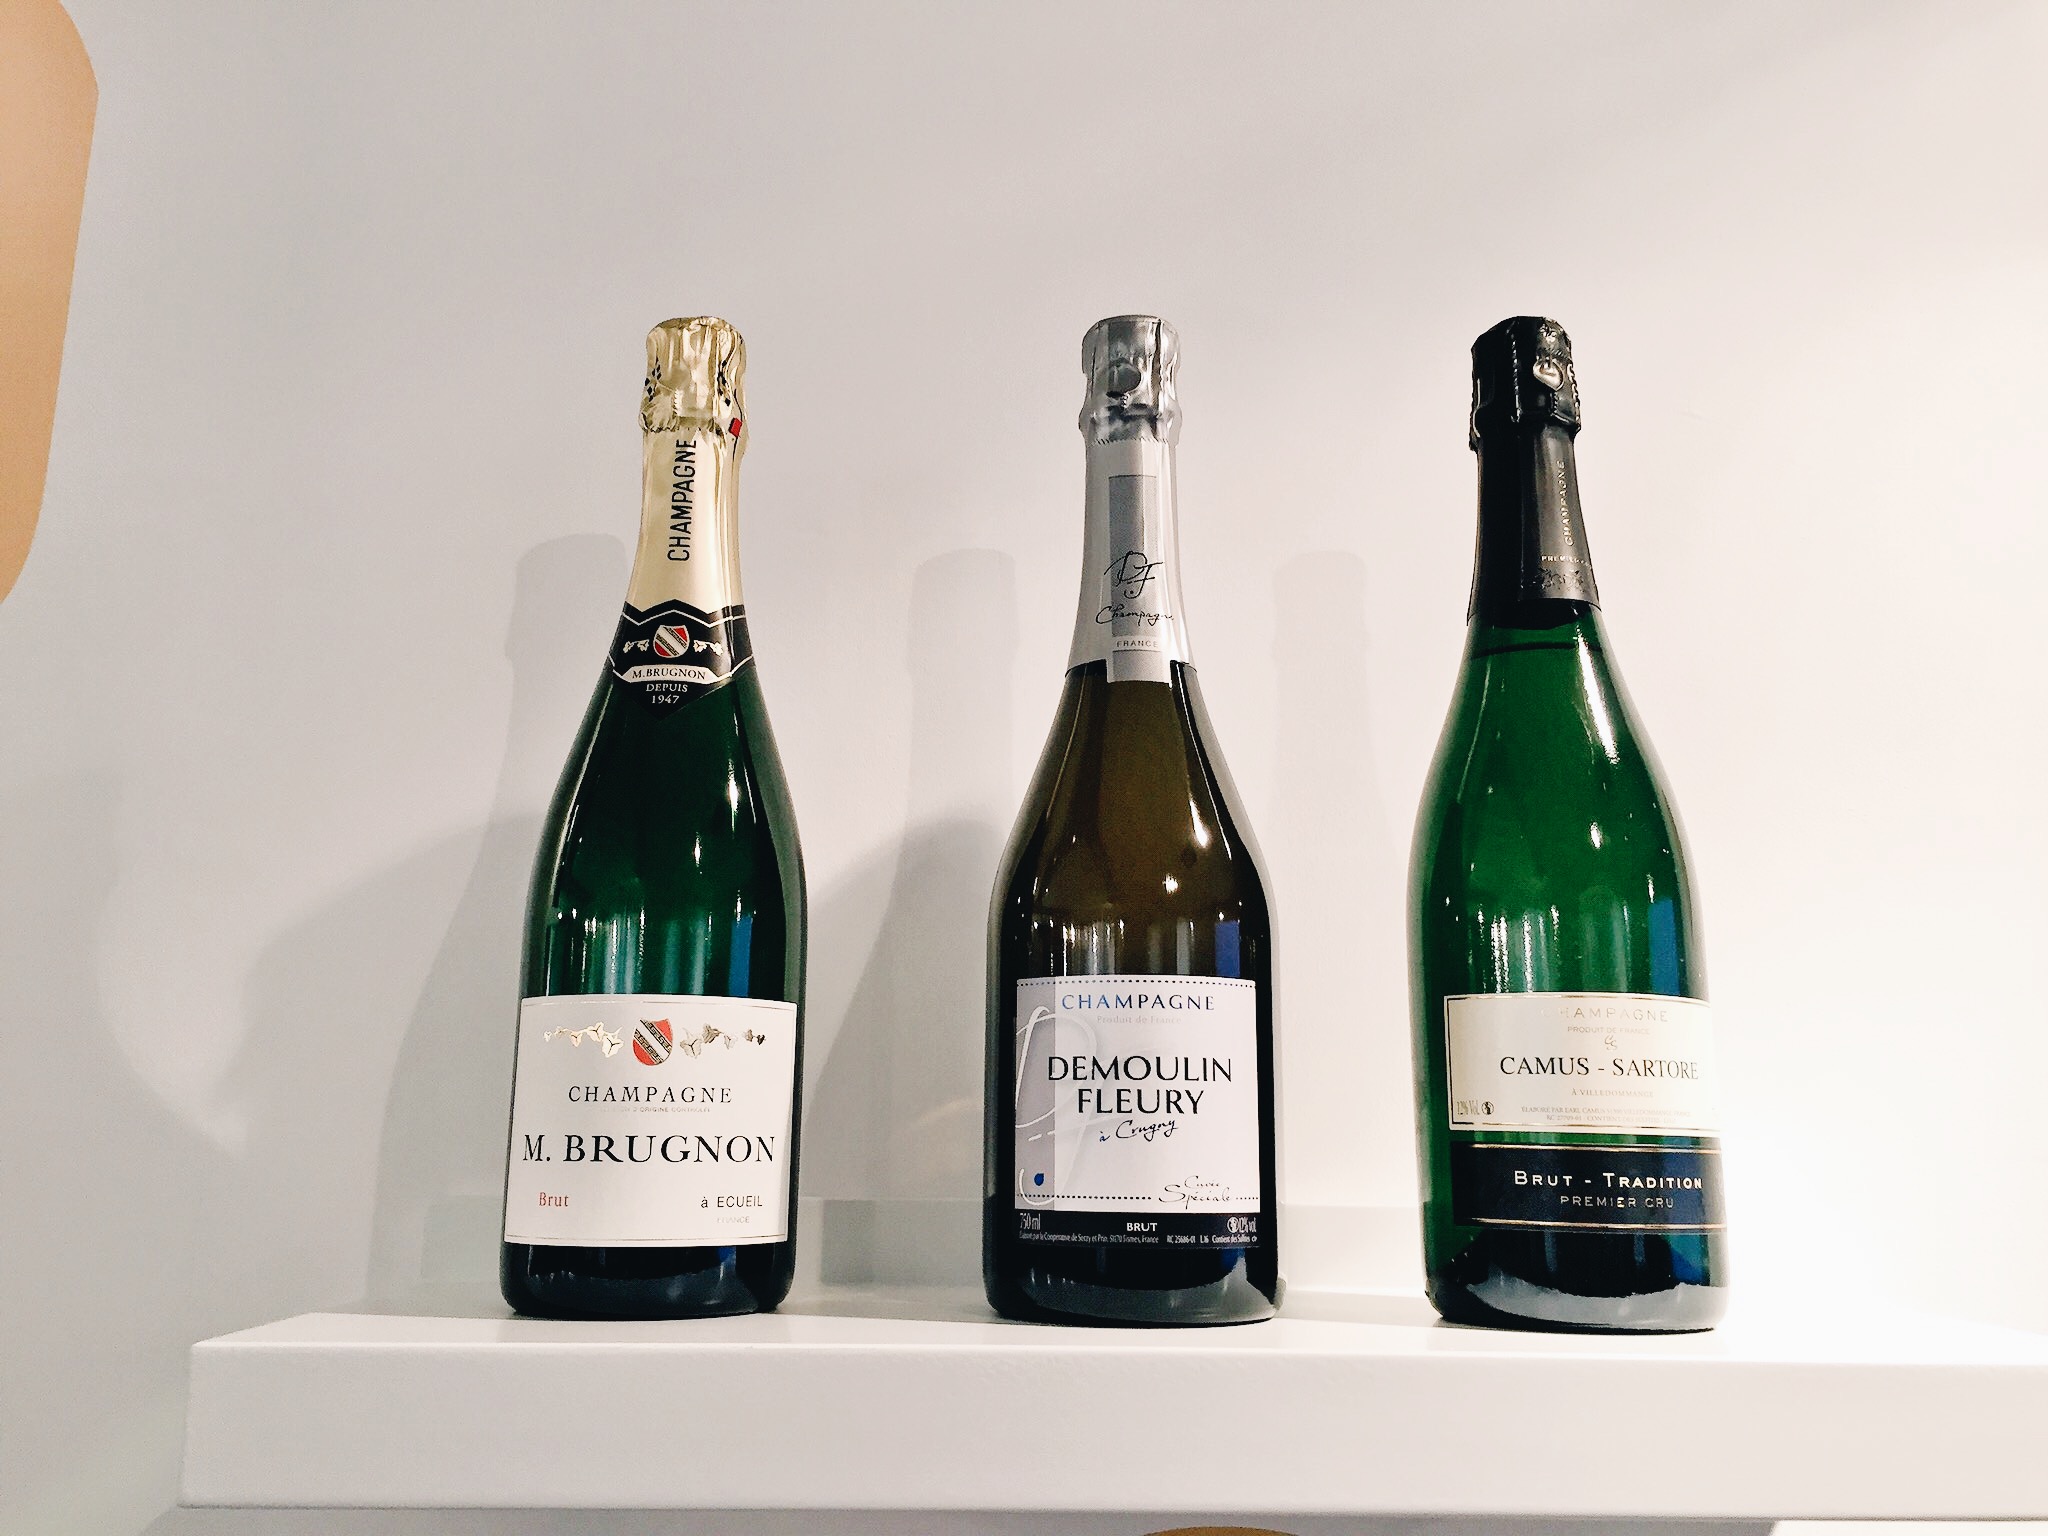 Champagne-M-Brugnon-Demoulin-Fleury-Camus-Sartore-Champagnes-de-Vignerons-photo-usofparis-blog